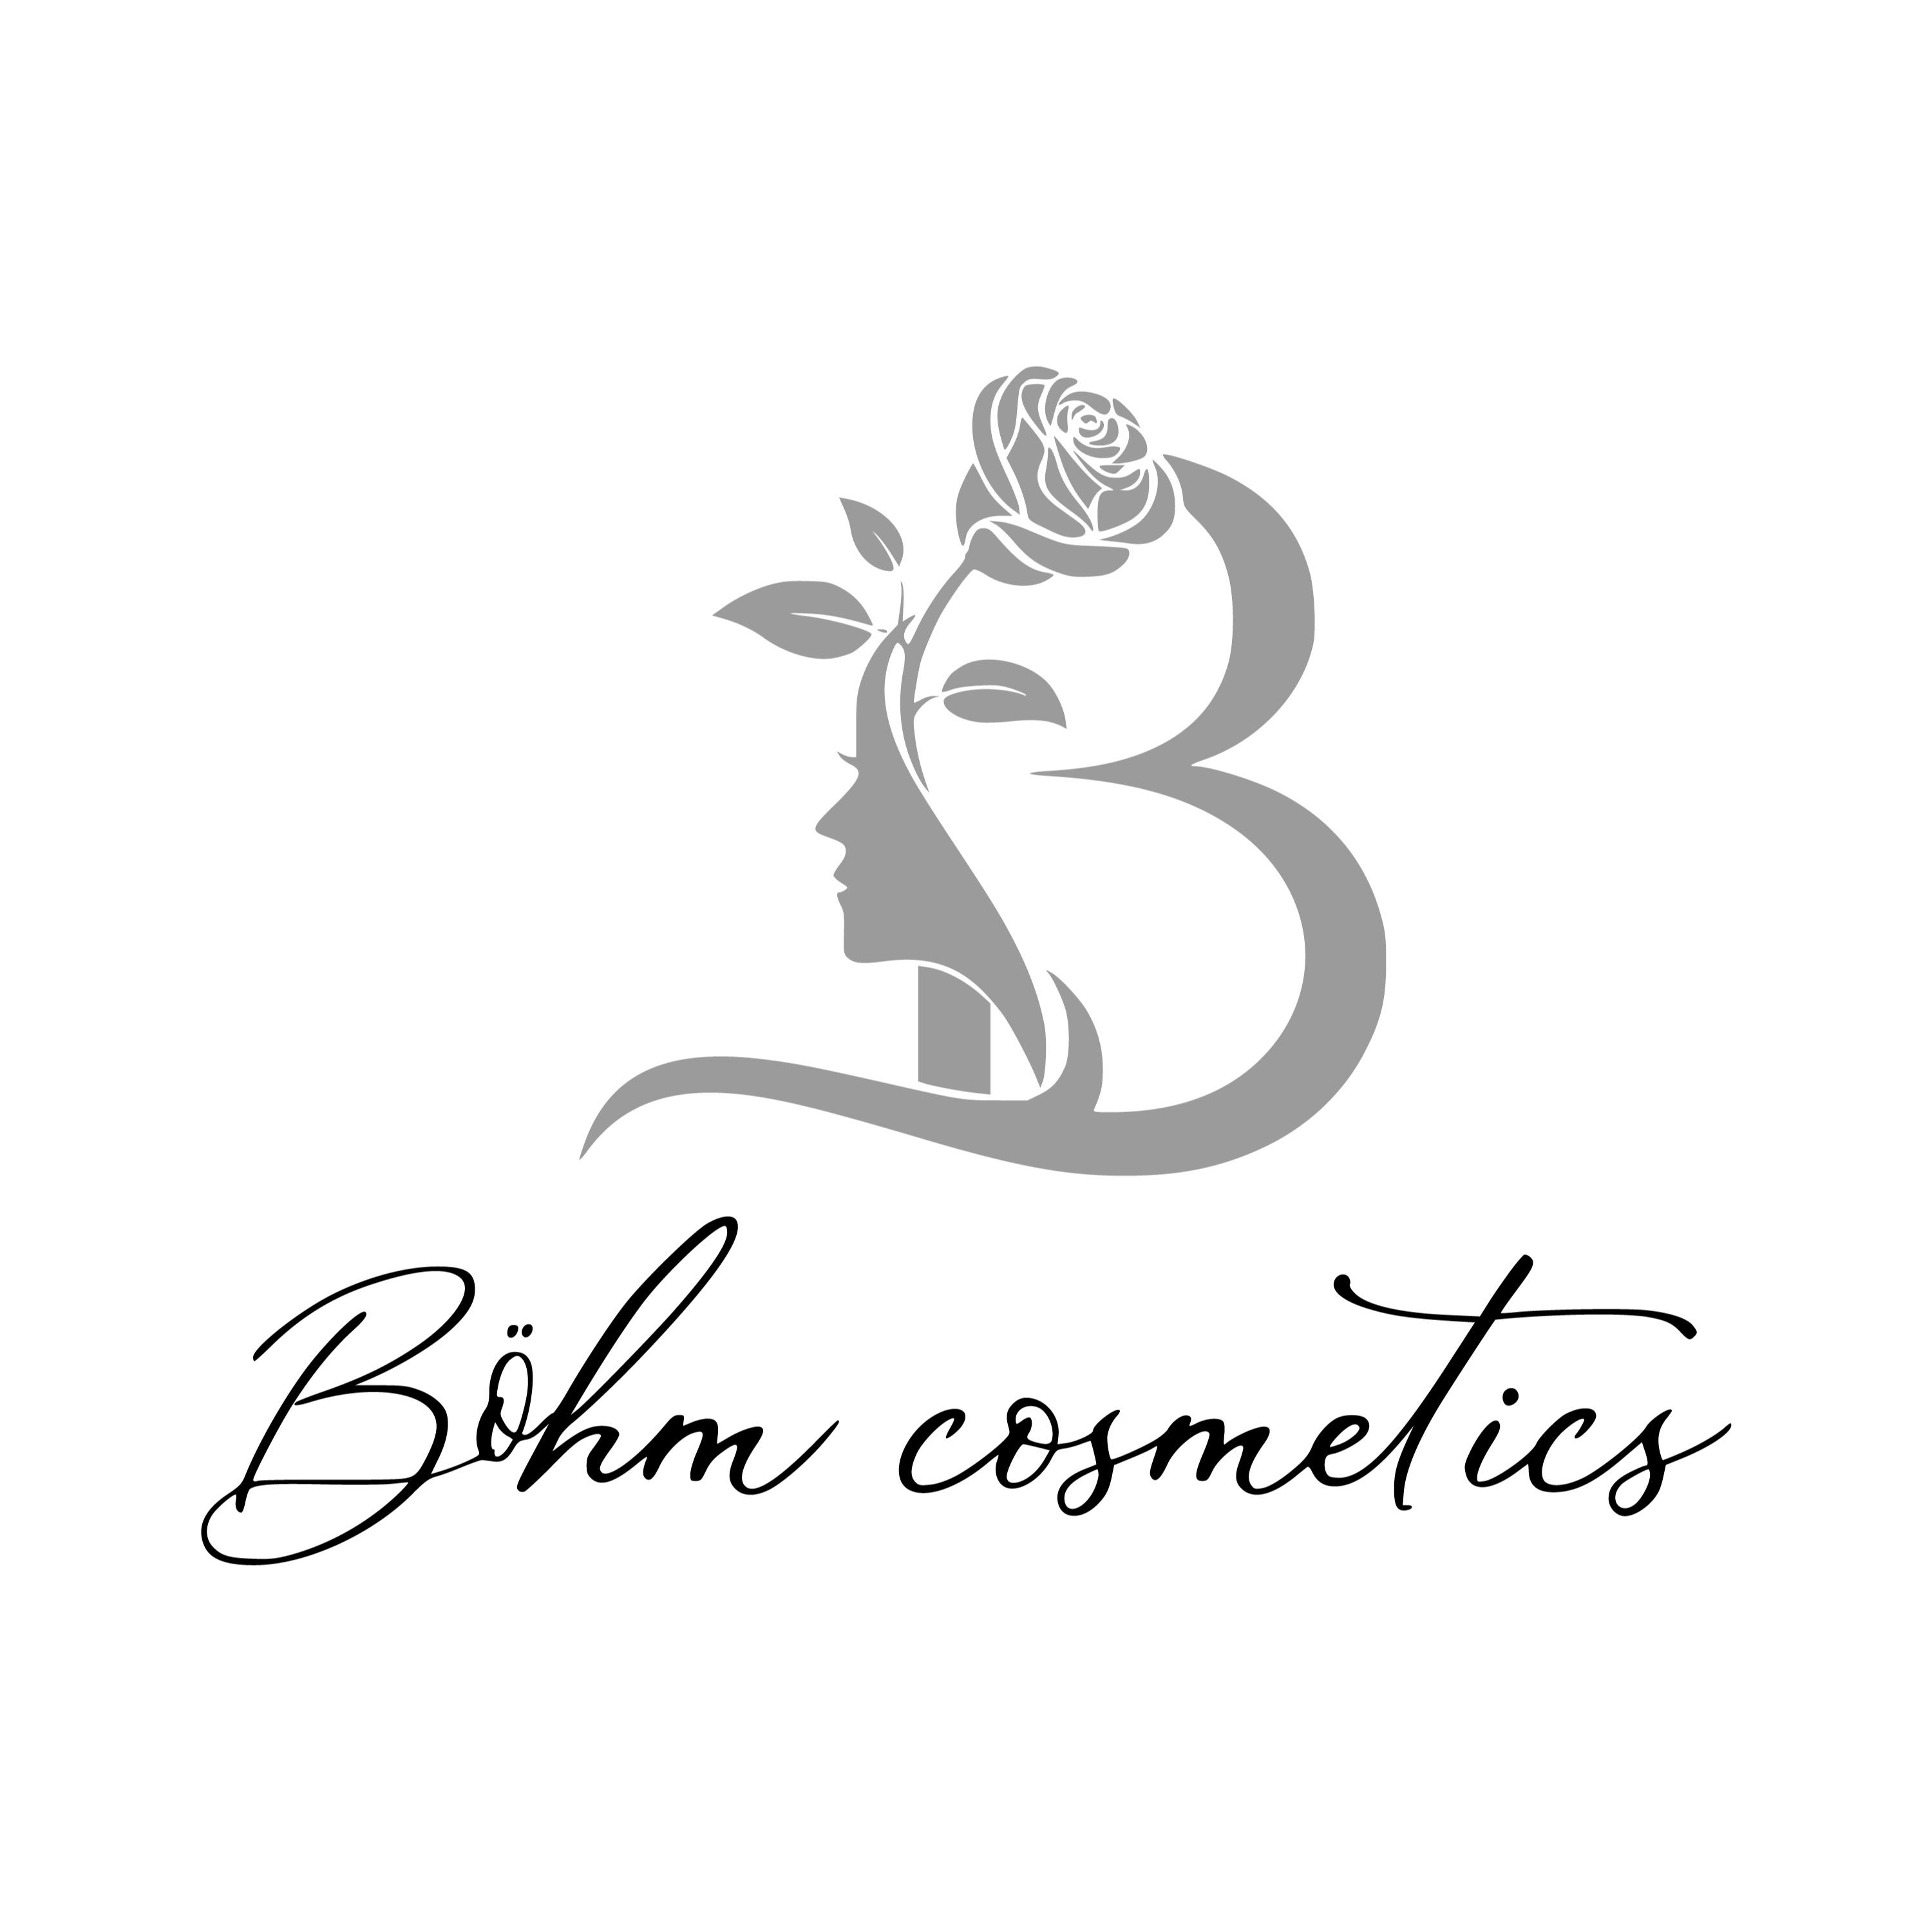 Böhm cosmetics - Kosmetikstudio München in München